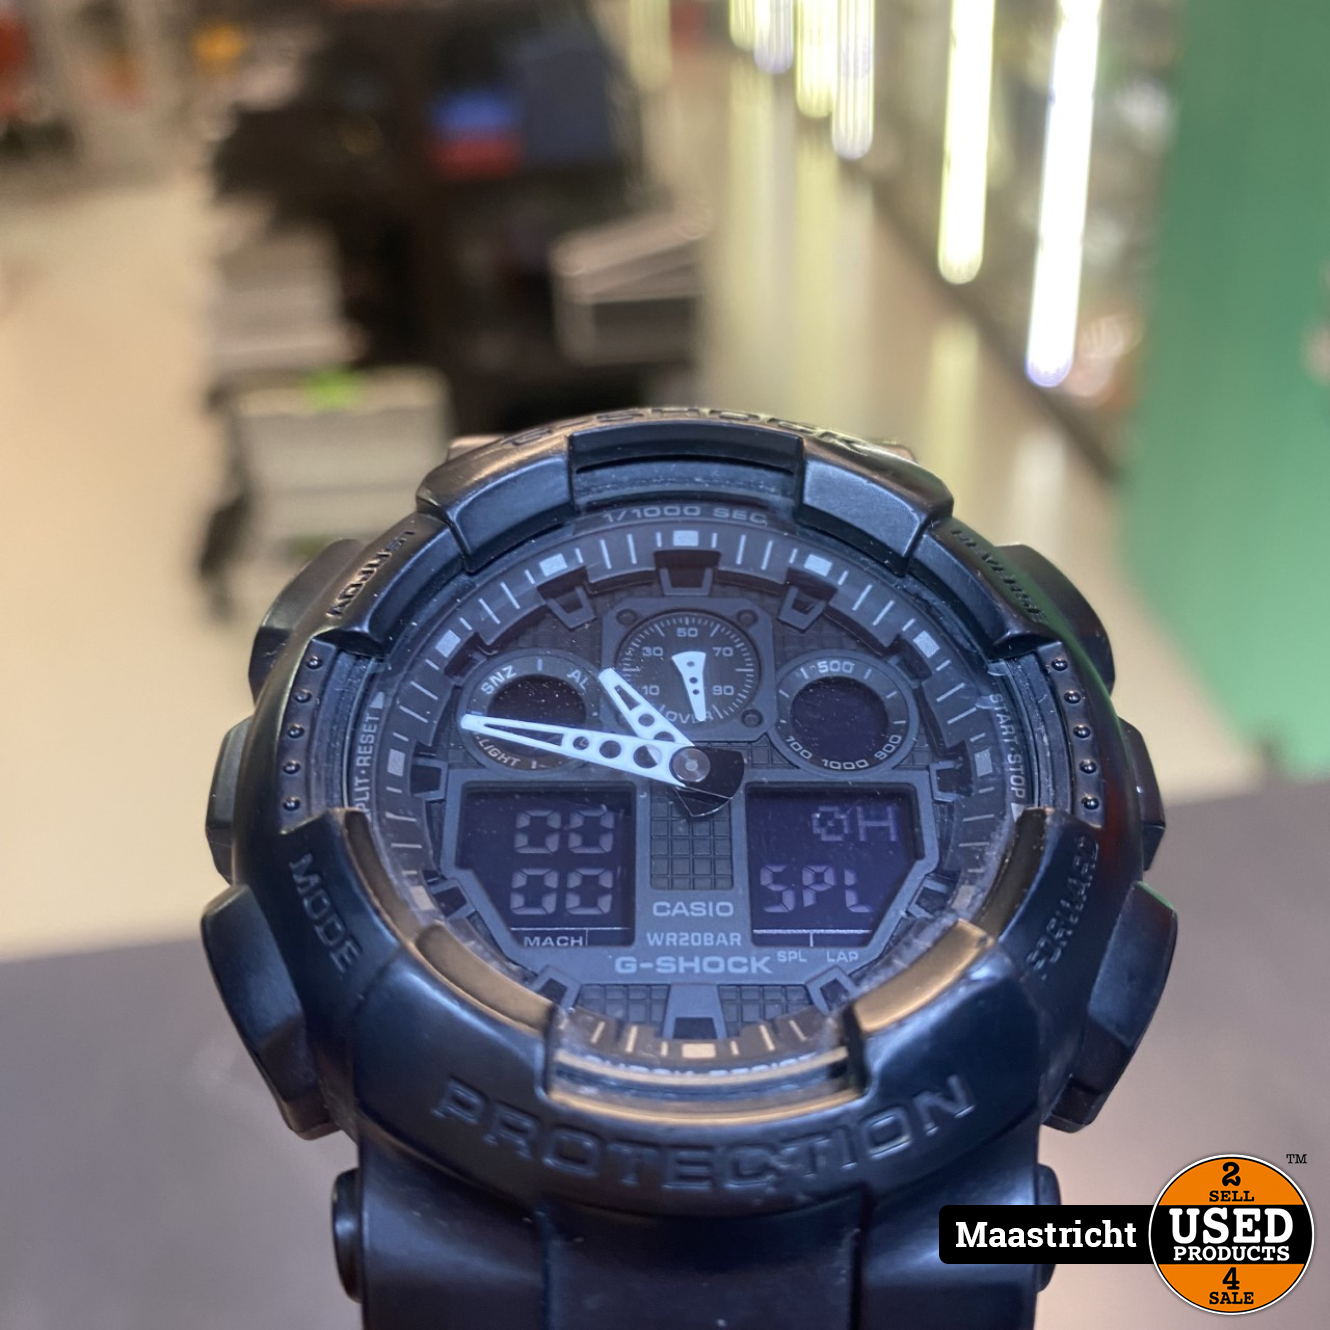 doel negeren R Casio G shock Horloge Zwart - Used Products Maastricht